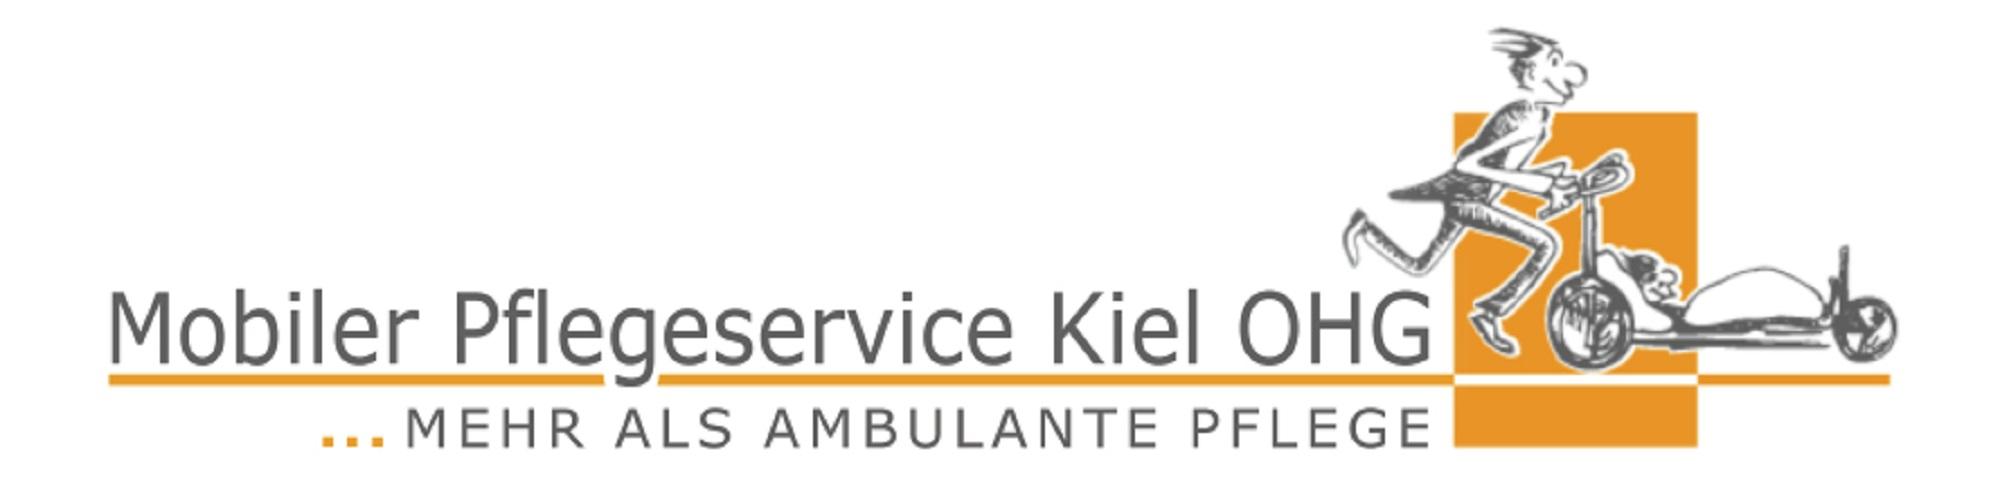 Mobiler Pflegeservice Kiel OHG